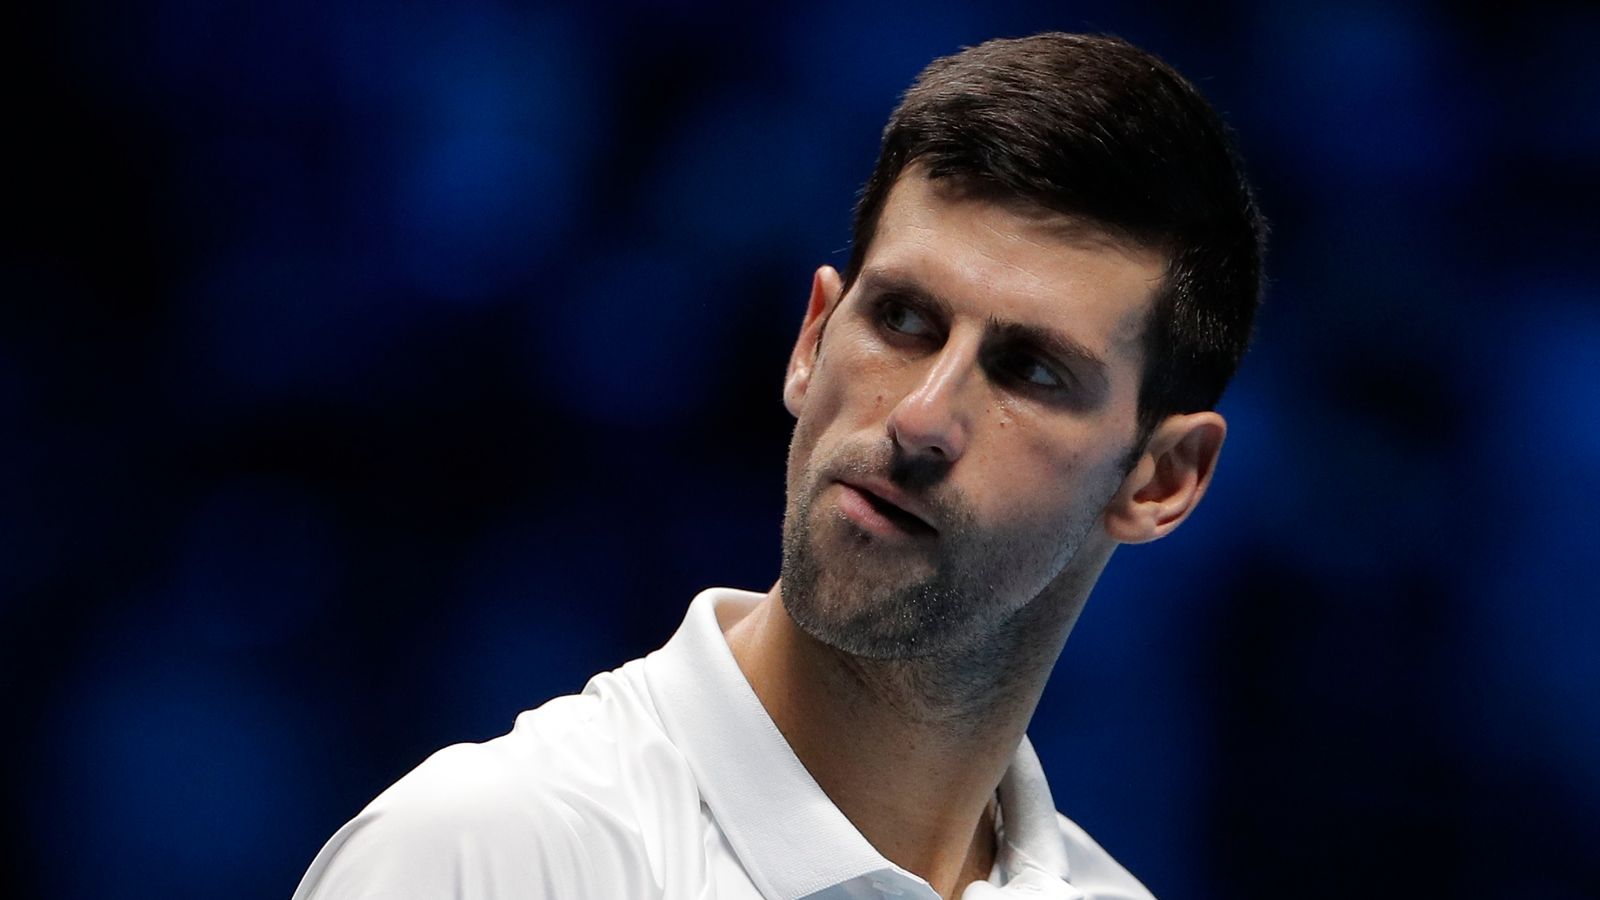 Novak Djokovic visa appeal hearing scheduled for Sunday morning